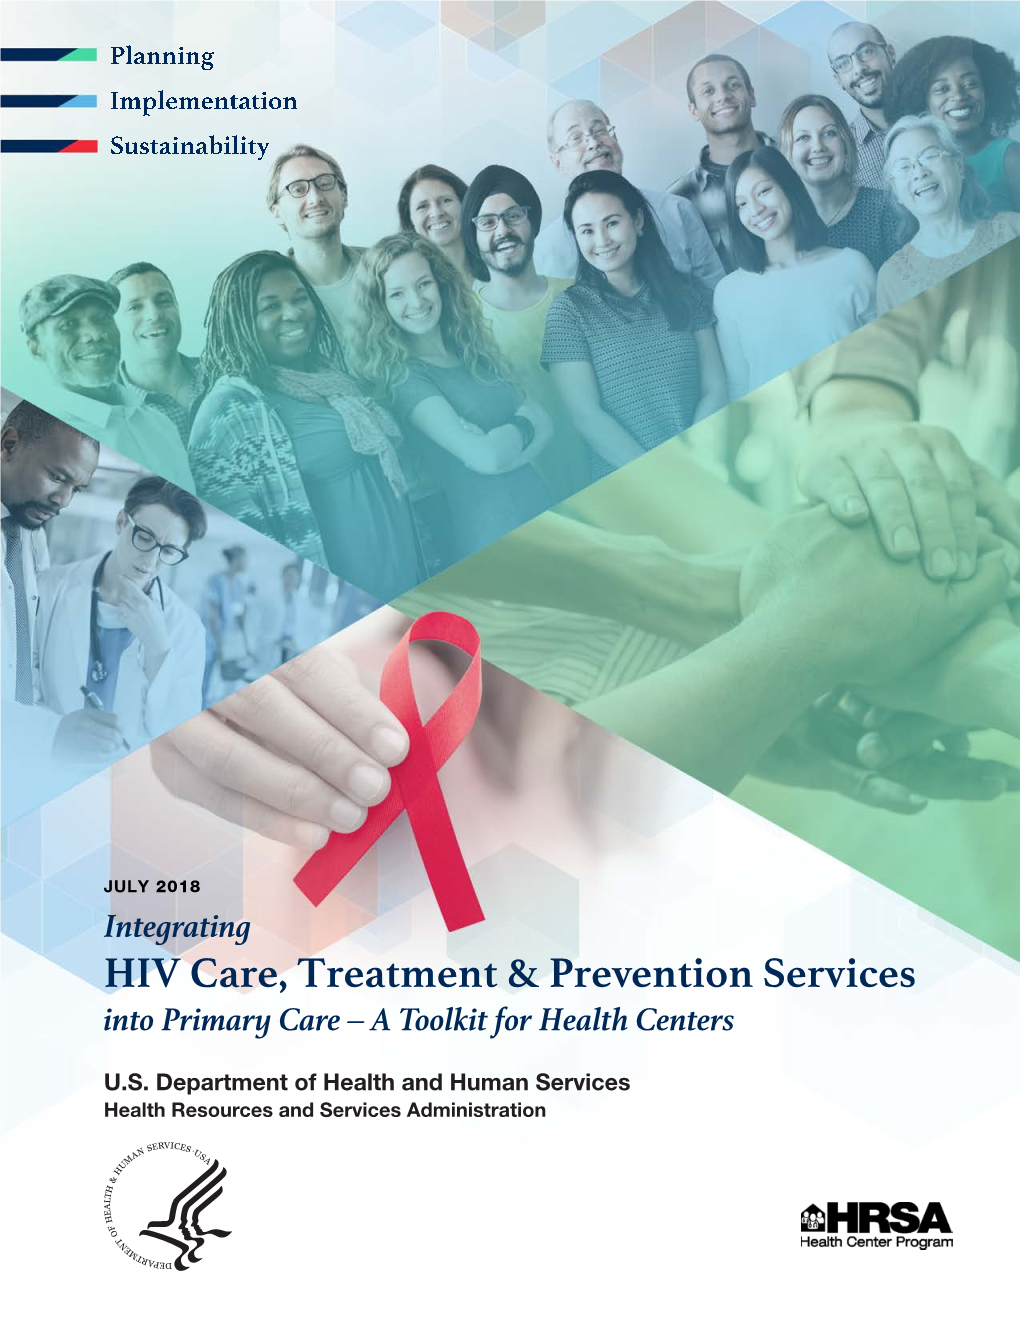 Integrating HIV Care, Treatment & Prevention Services Into Primary Care